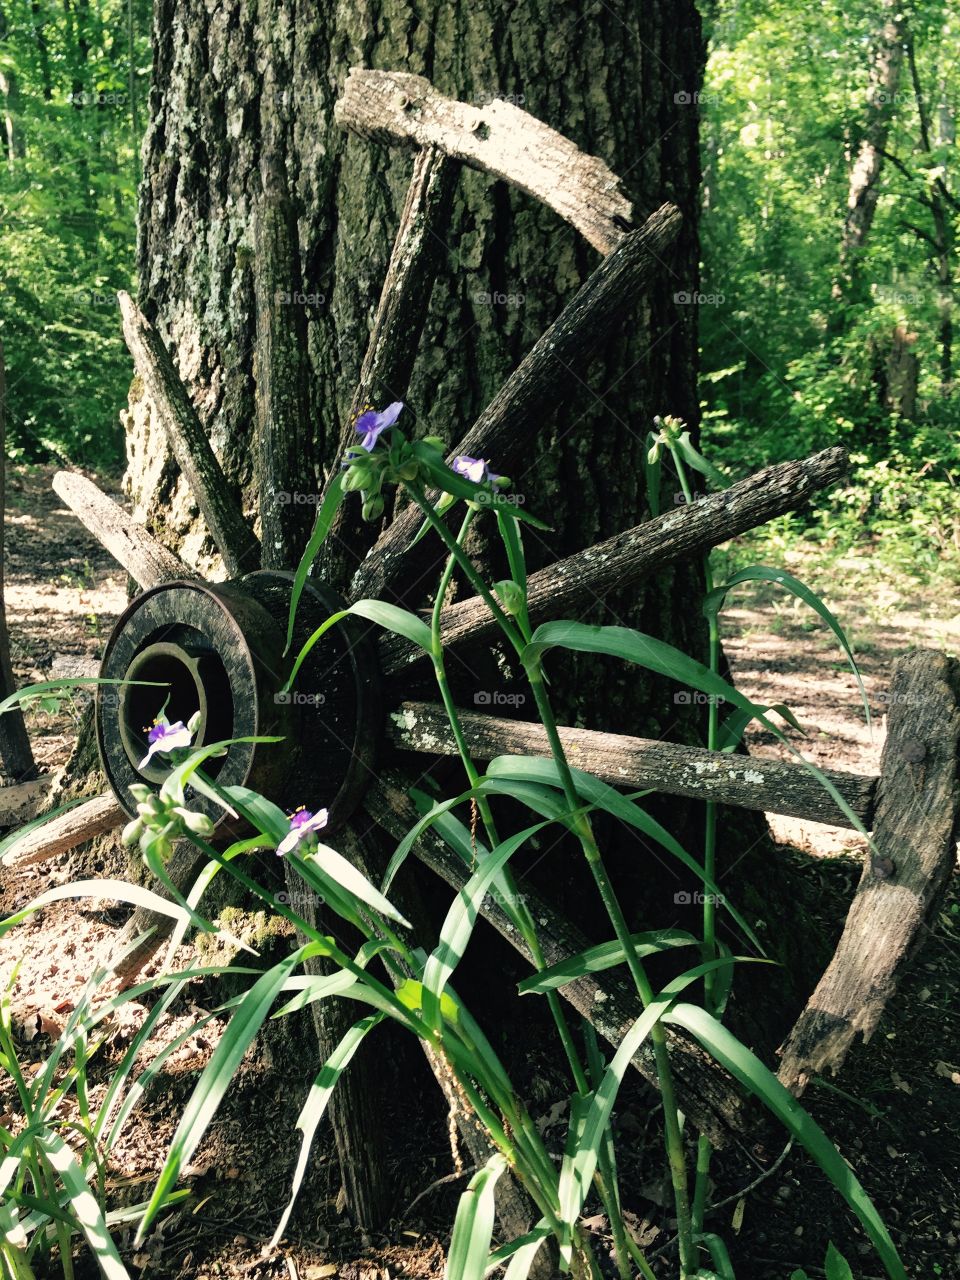 Aging beauty . Old wheel with purple flowers